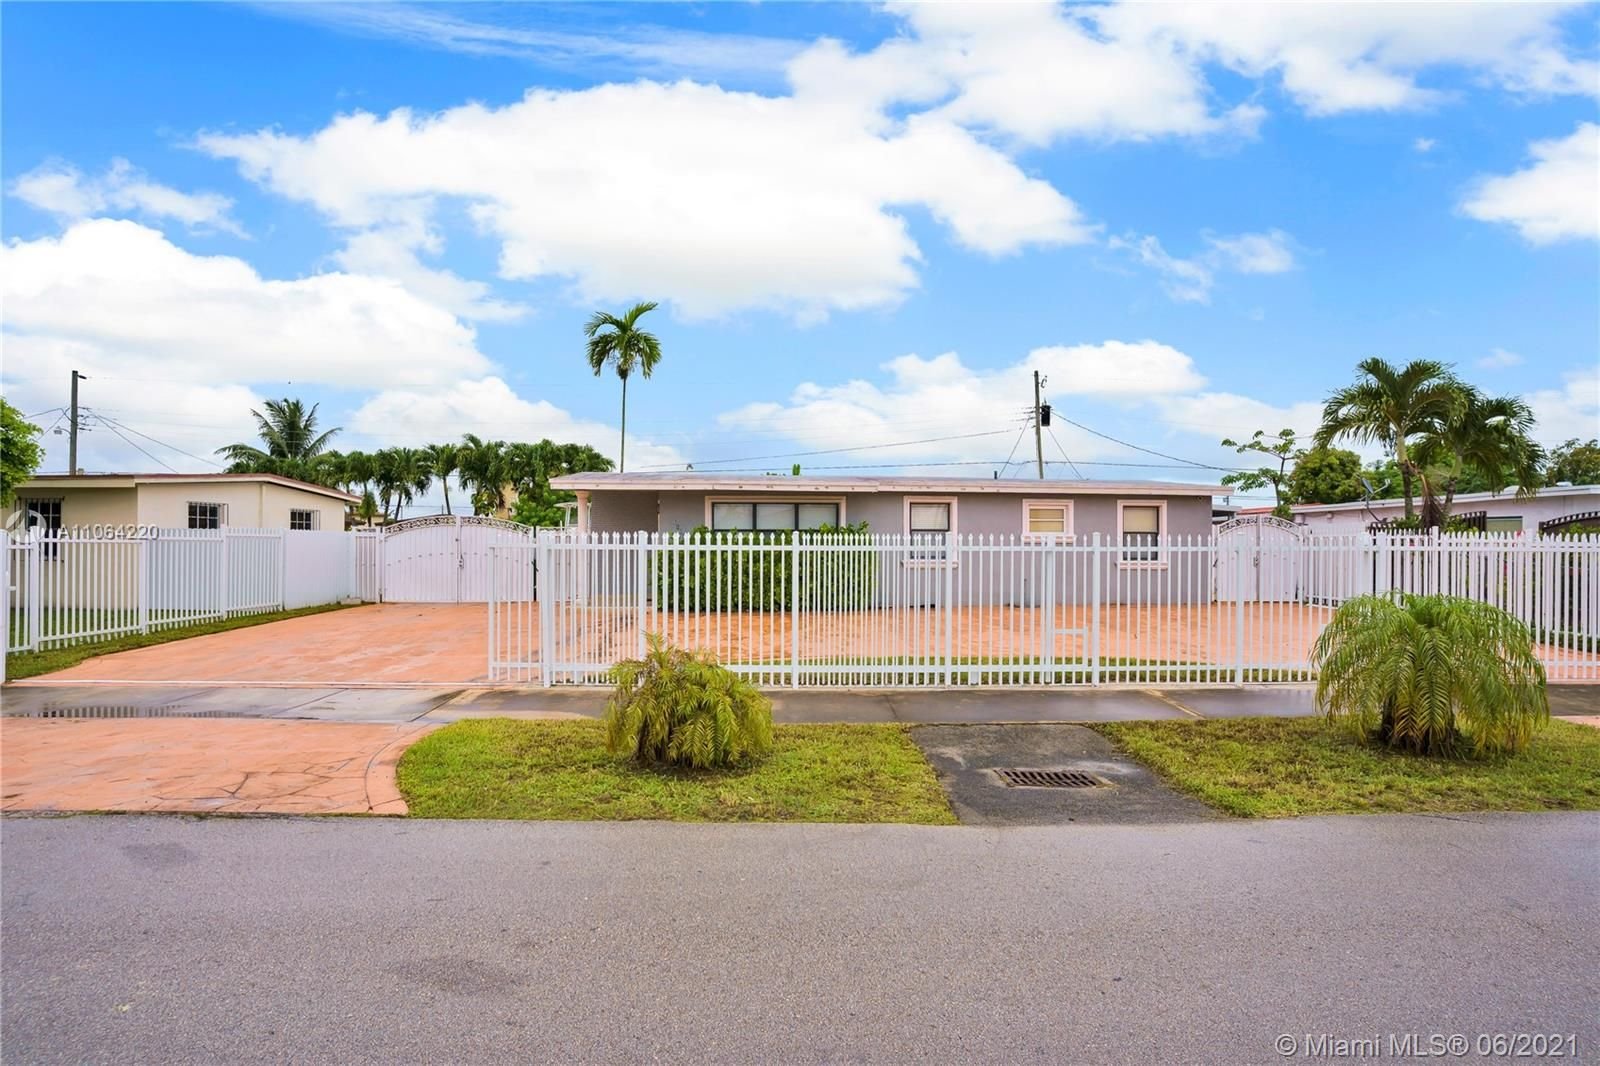 Real estate property located at 5101 116th Ave, Miami-Dade County, Miami, FL